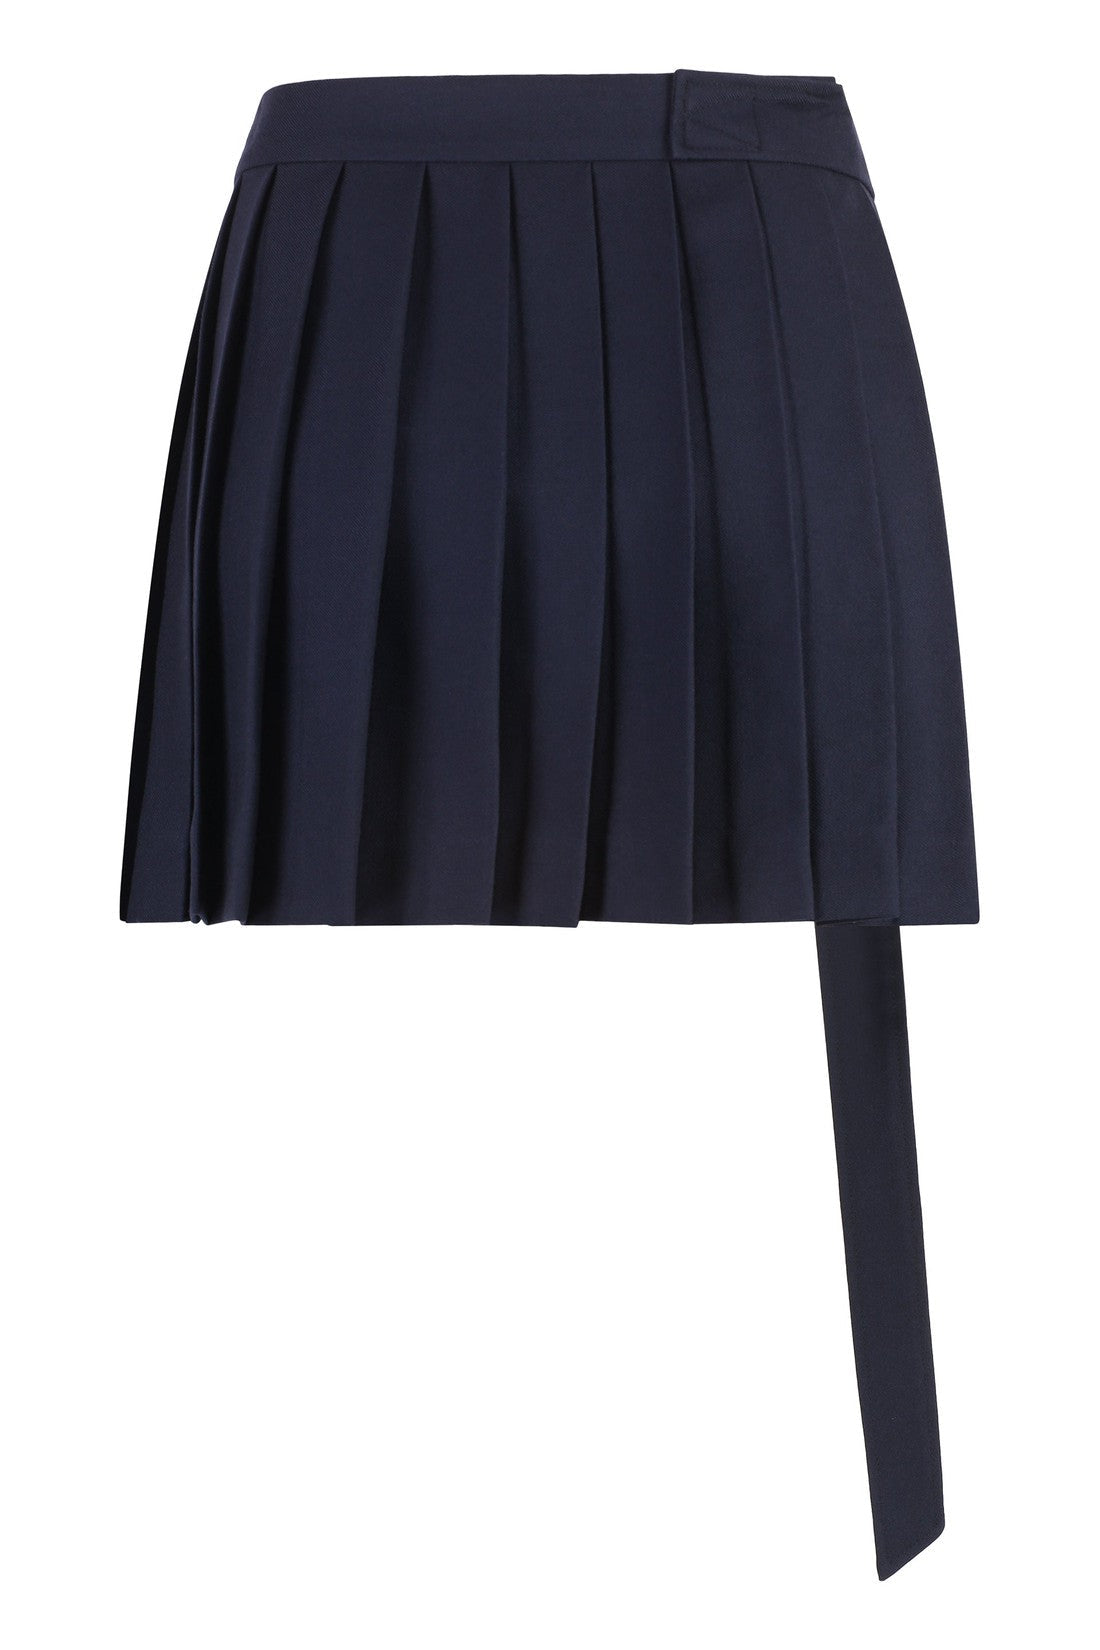 Pleated-skirt-AMI-PARIS-designer-outlet-archivist-2_b3e5c510-178e-40be-b614-18576d03e4b7.jpg